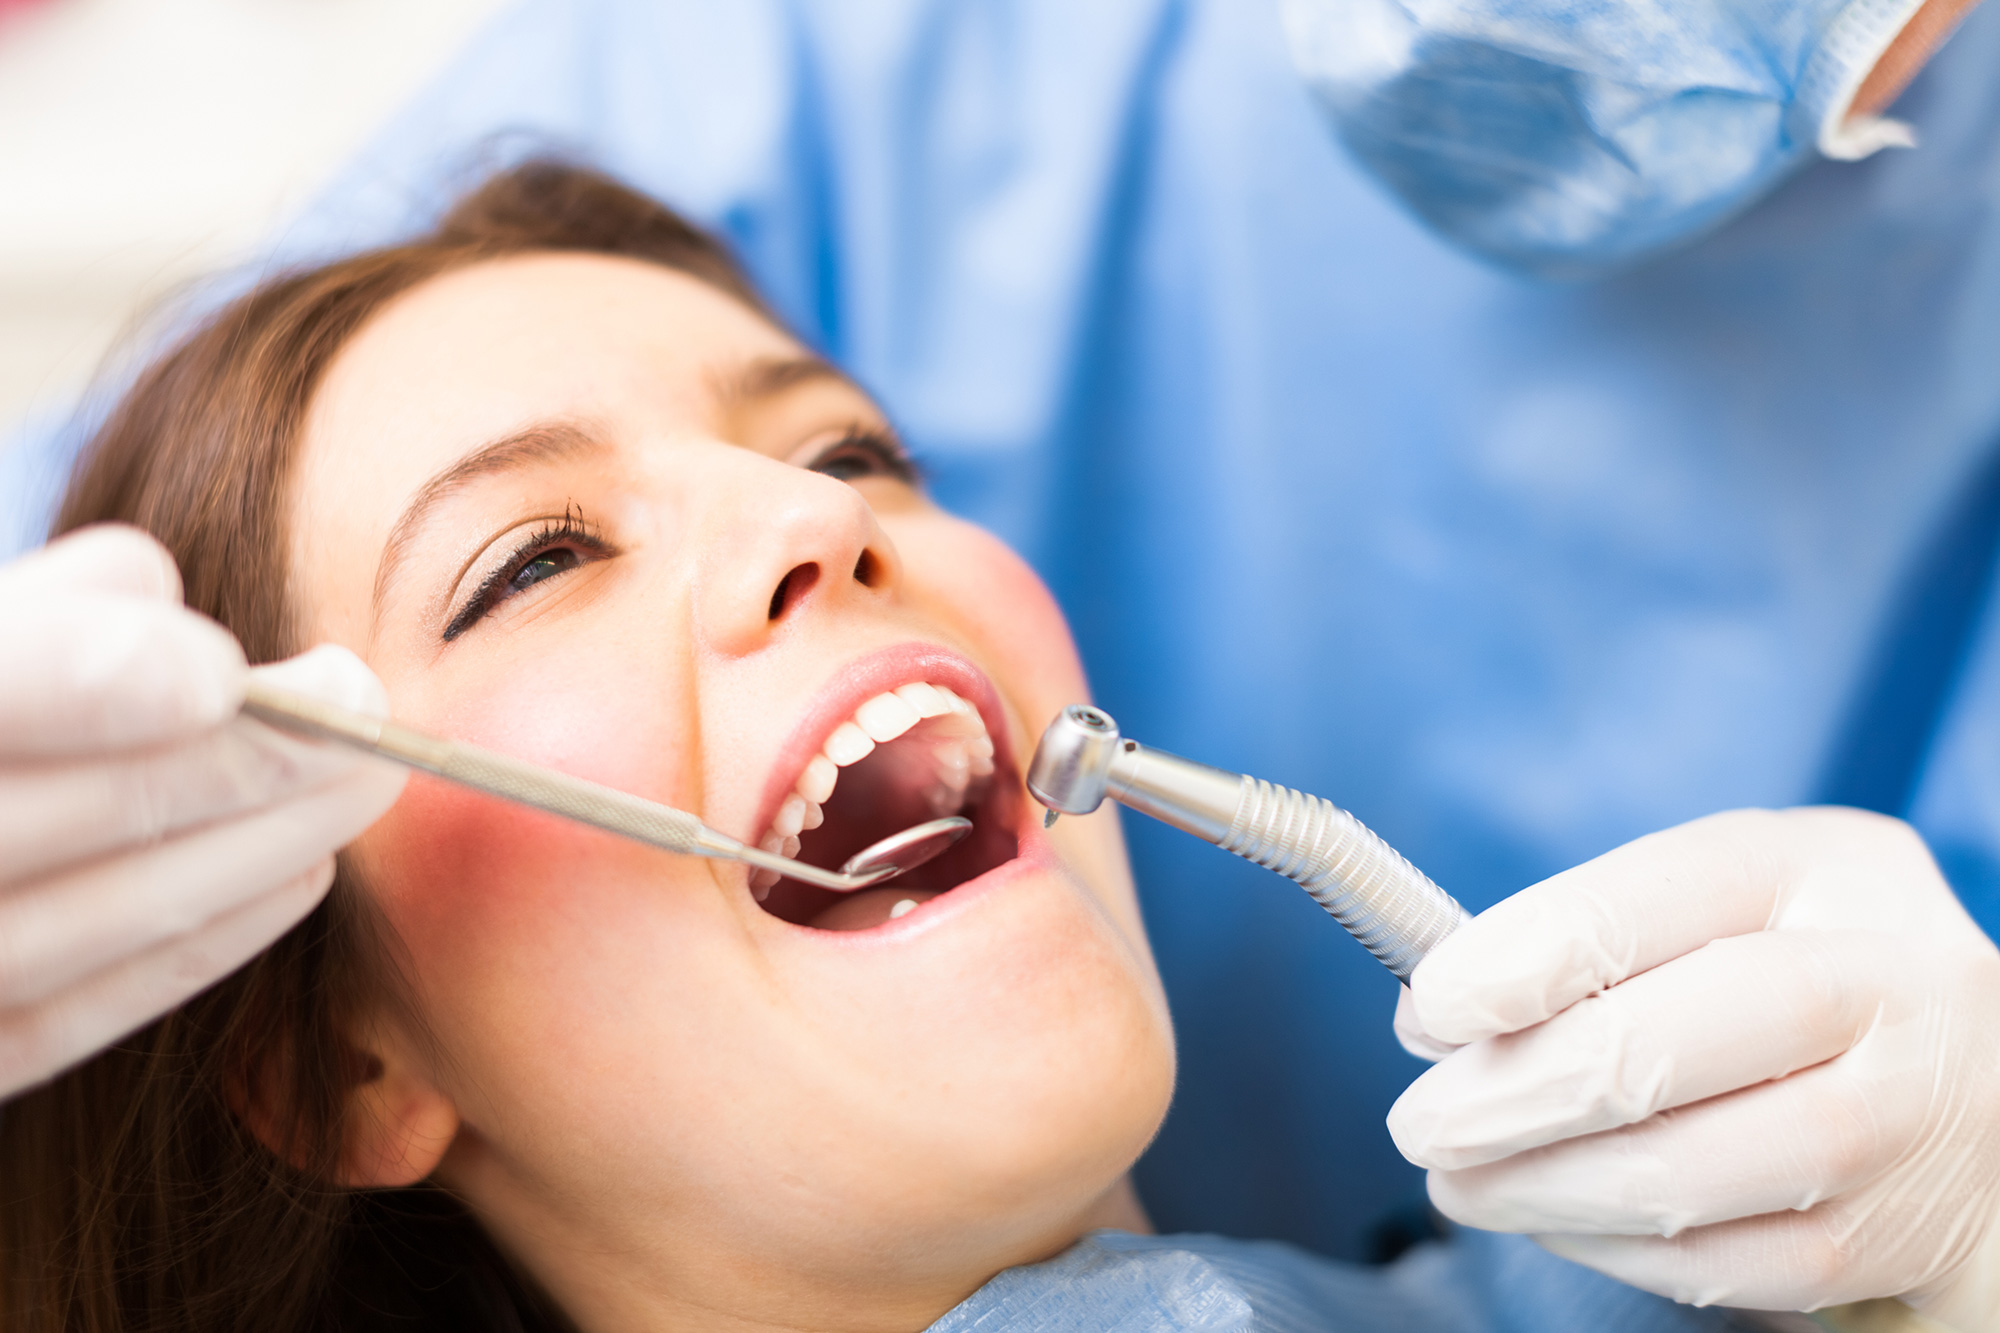 Dentist checkup